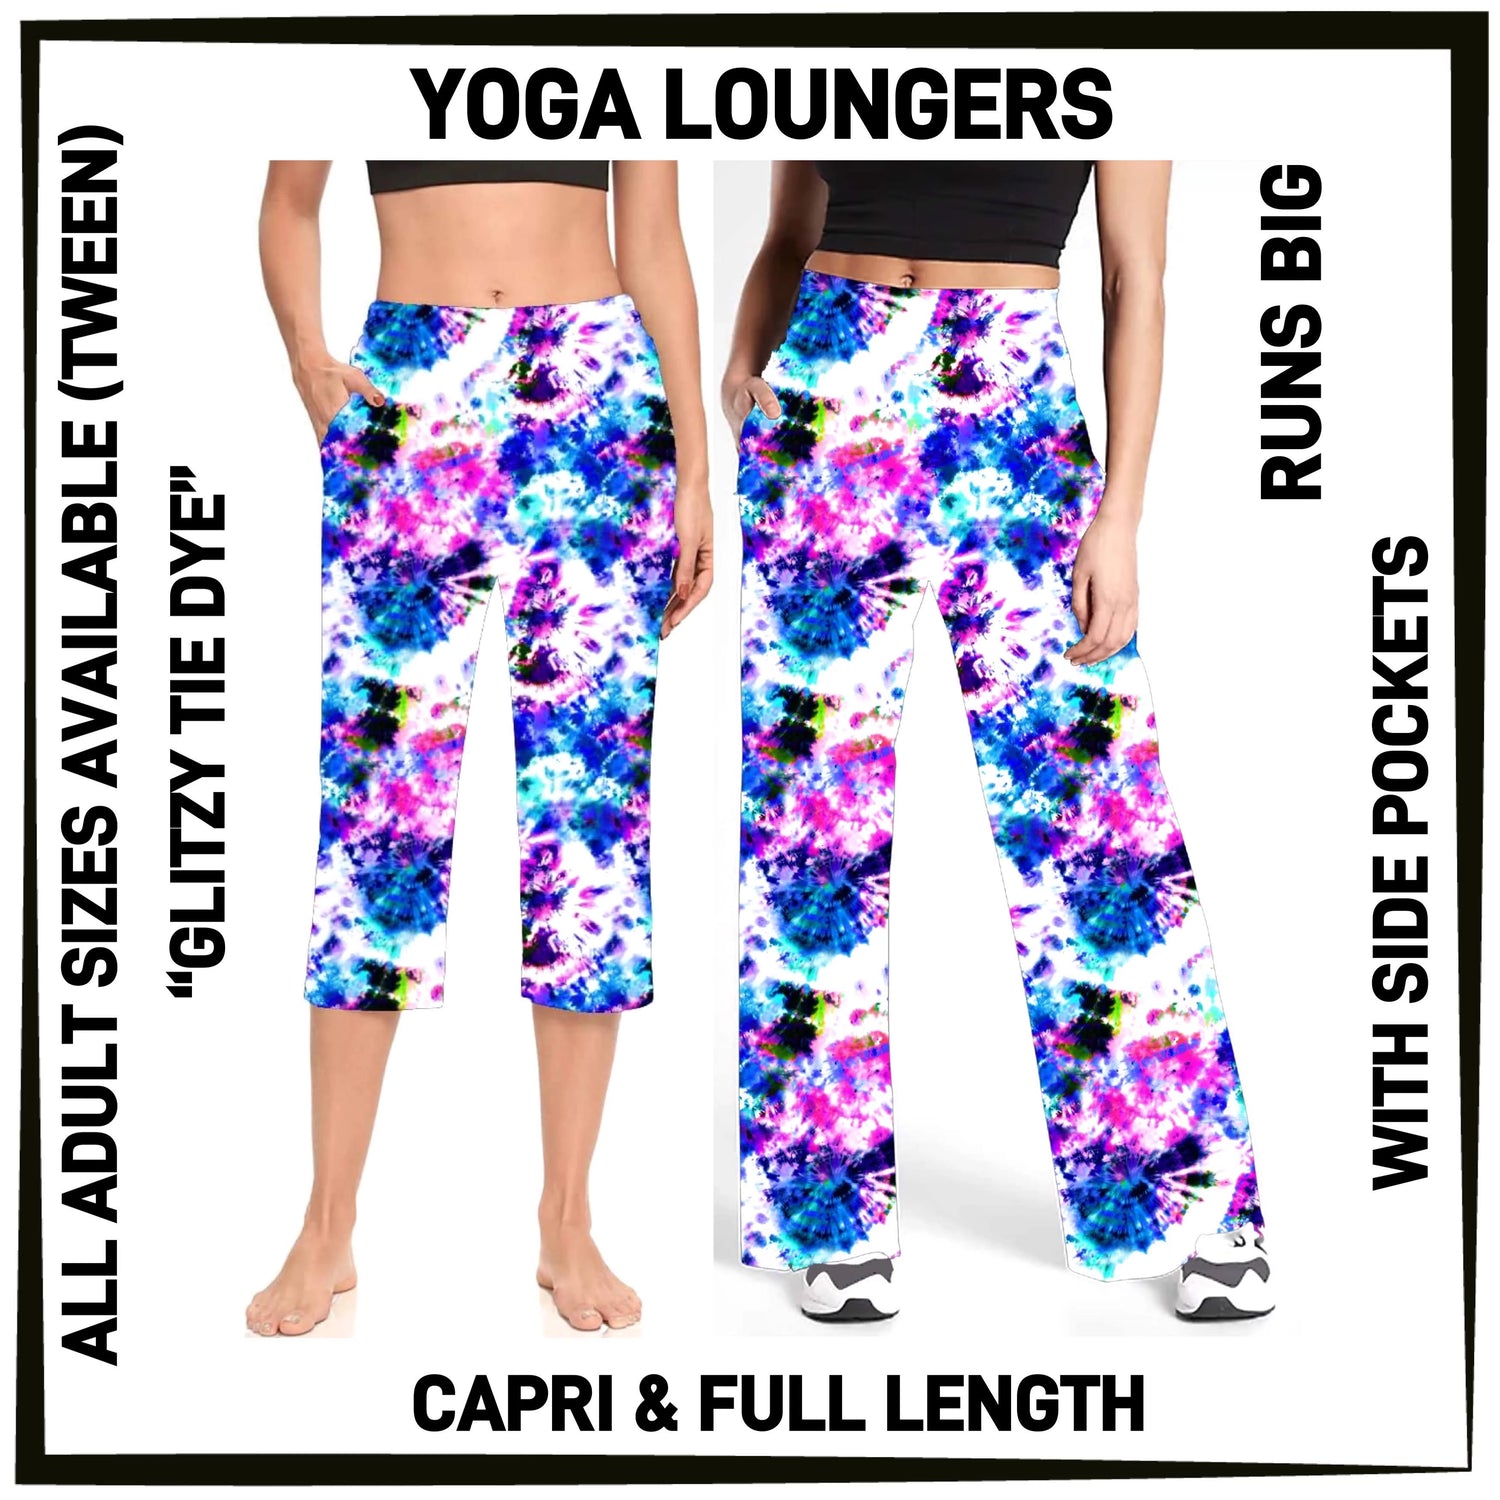 Yoga Loungers